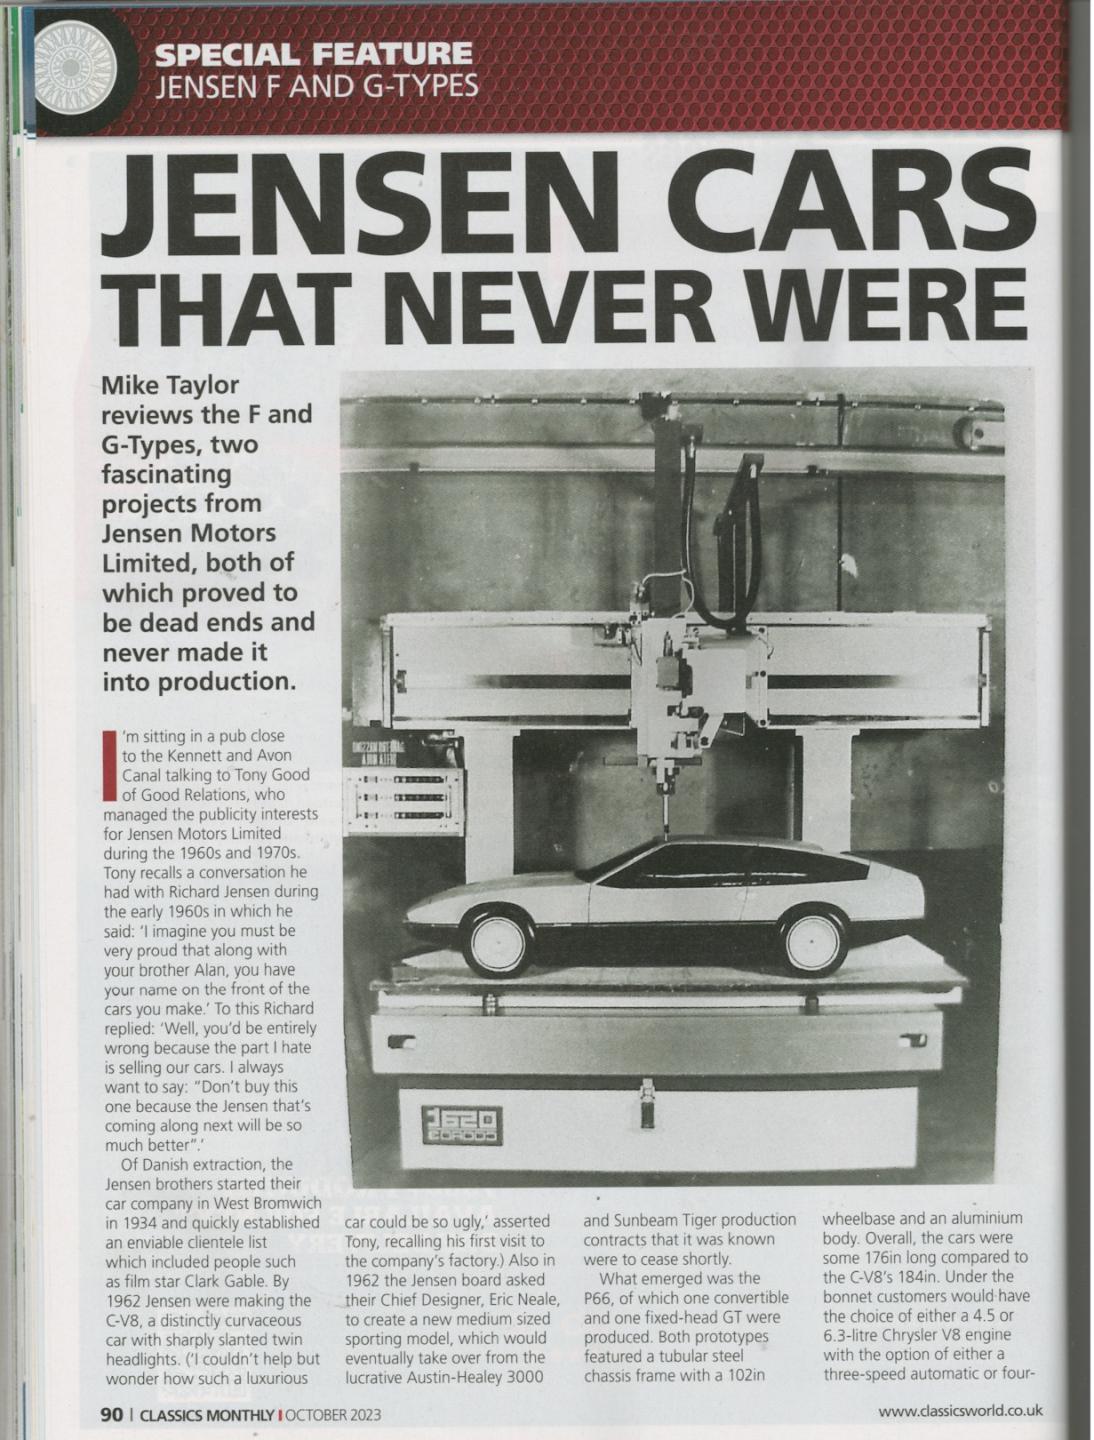 CM Jensen cars that never were page 1.jpeg